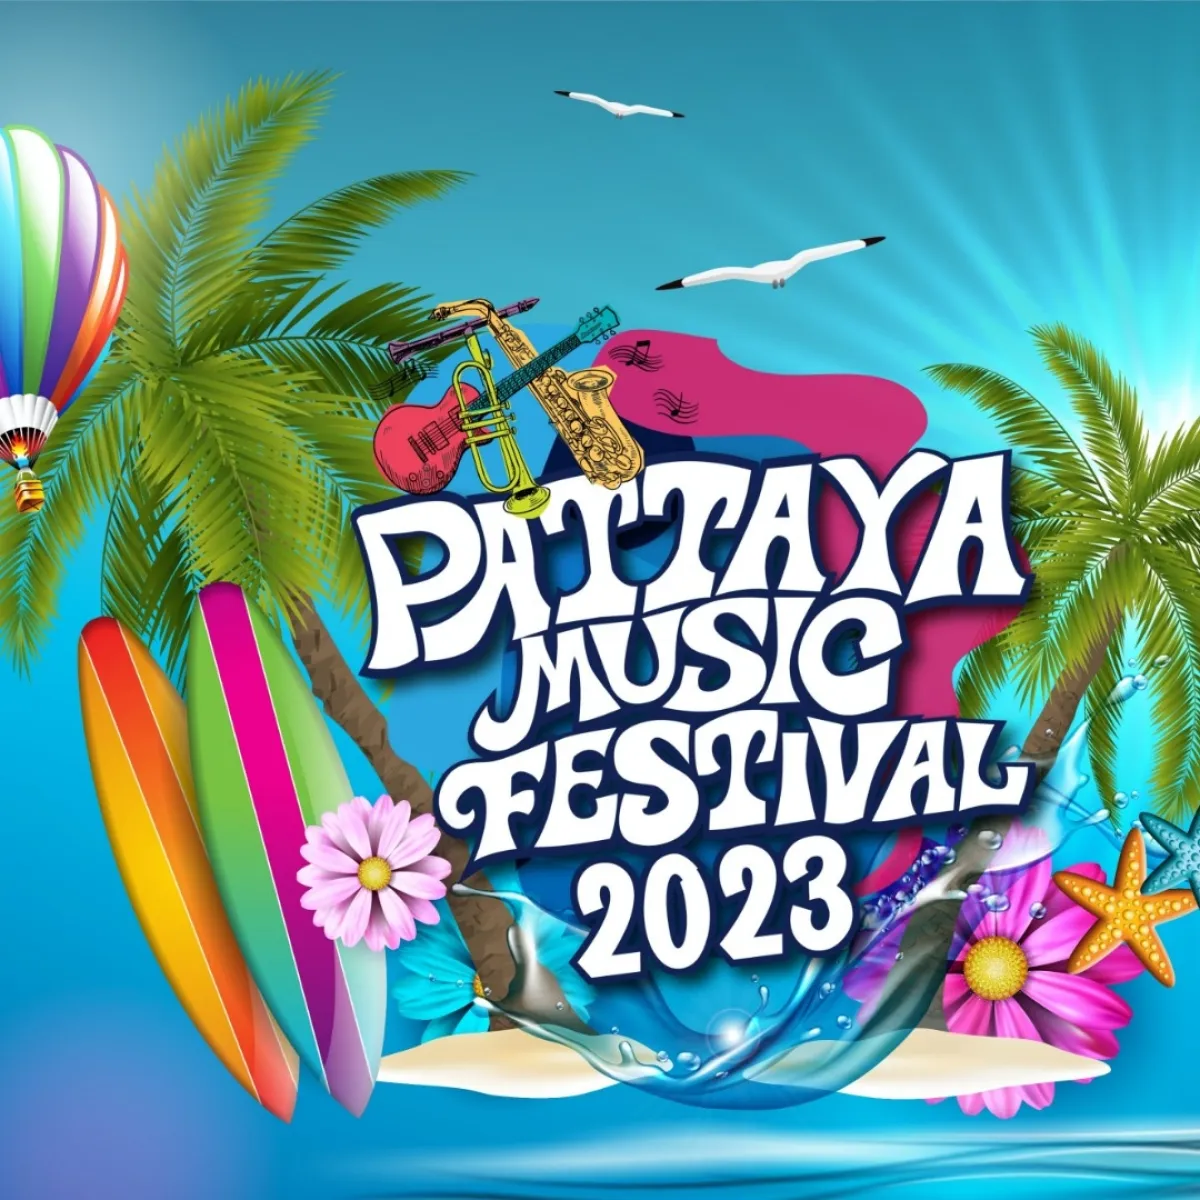 Travel calendar (March) – Pattaya Music Festival 2023 (throughout March)